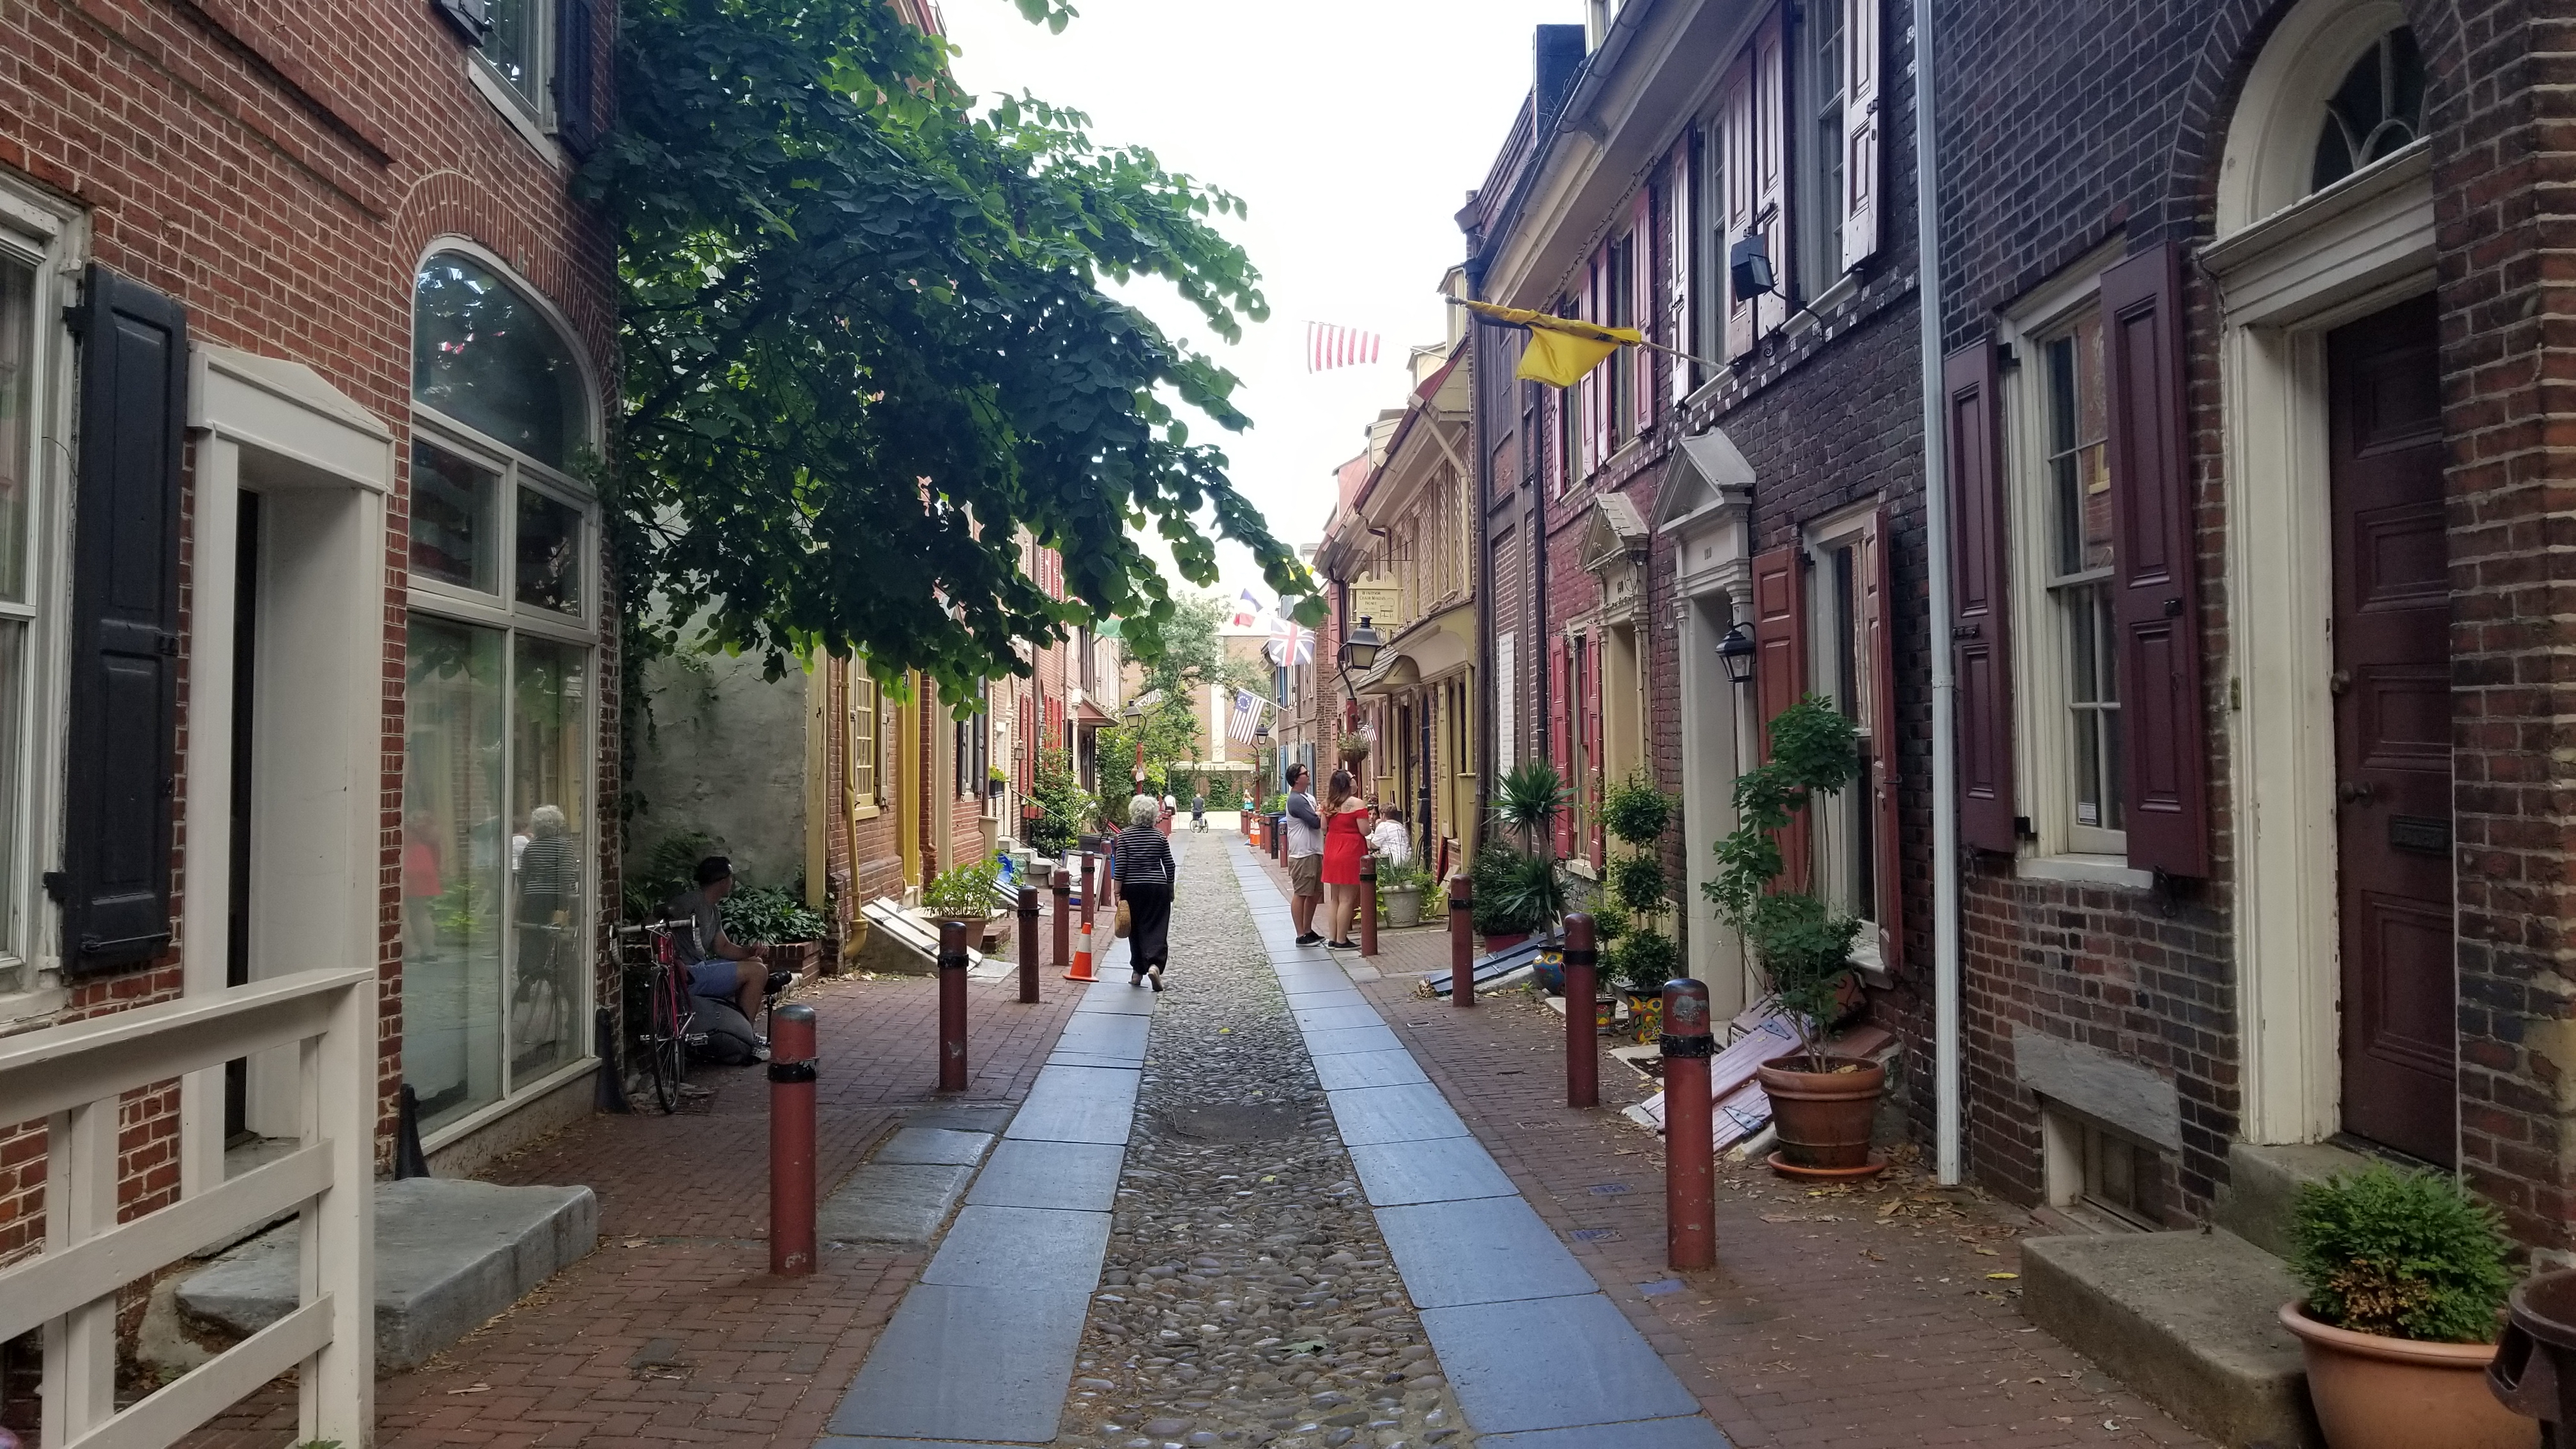 The restored 18th century homes of Elfreth's Alley Philadelphia